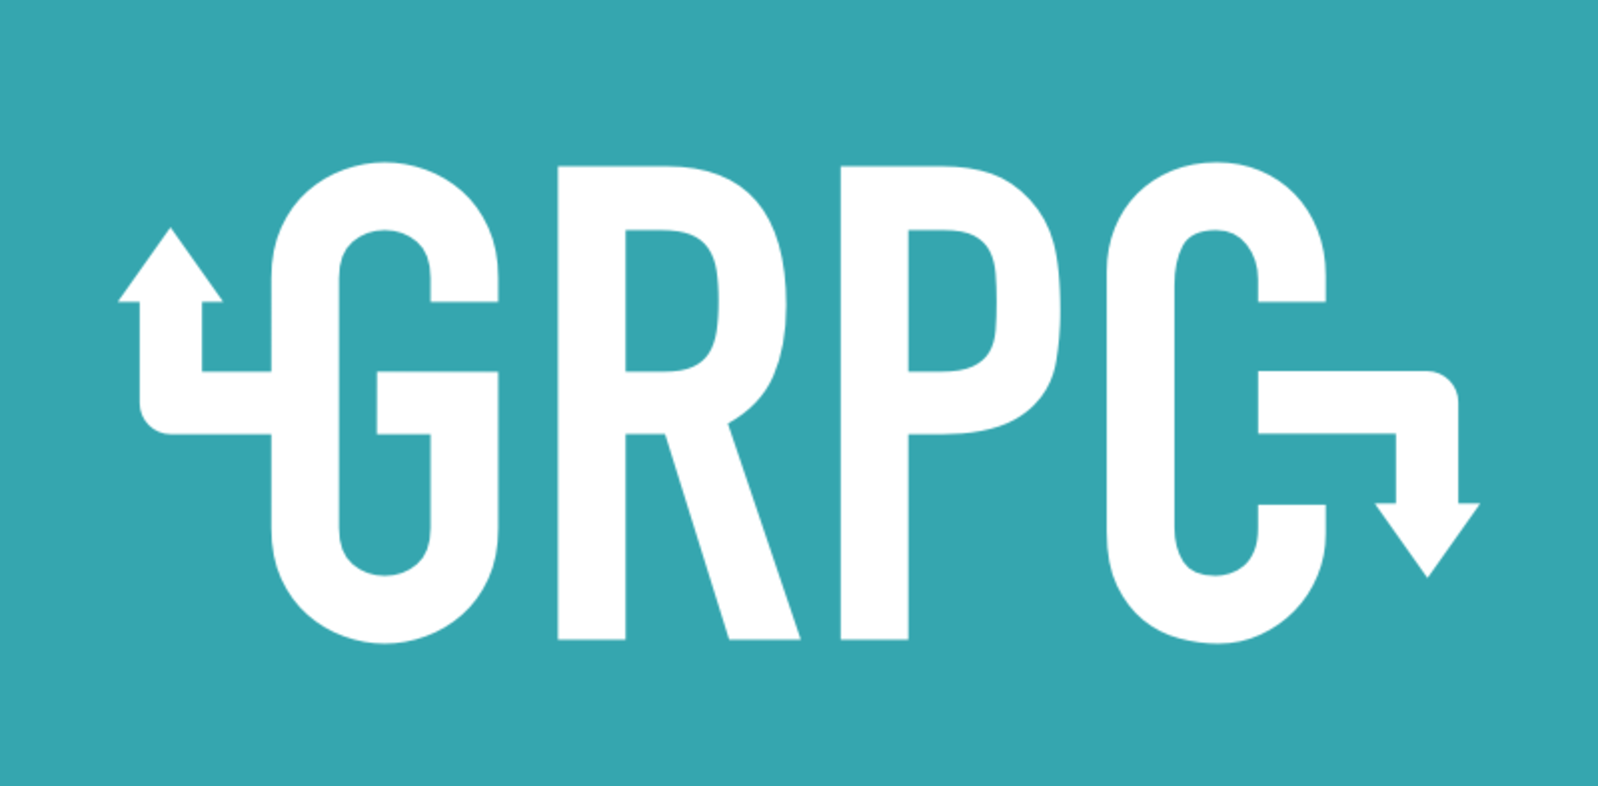 gRPC Logo